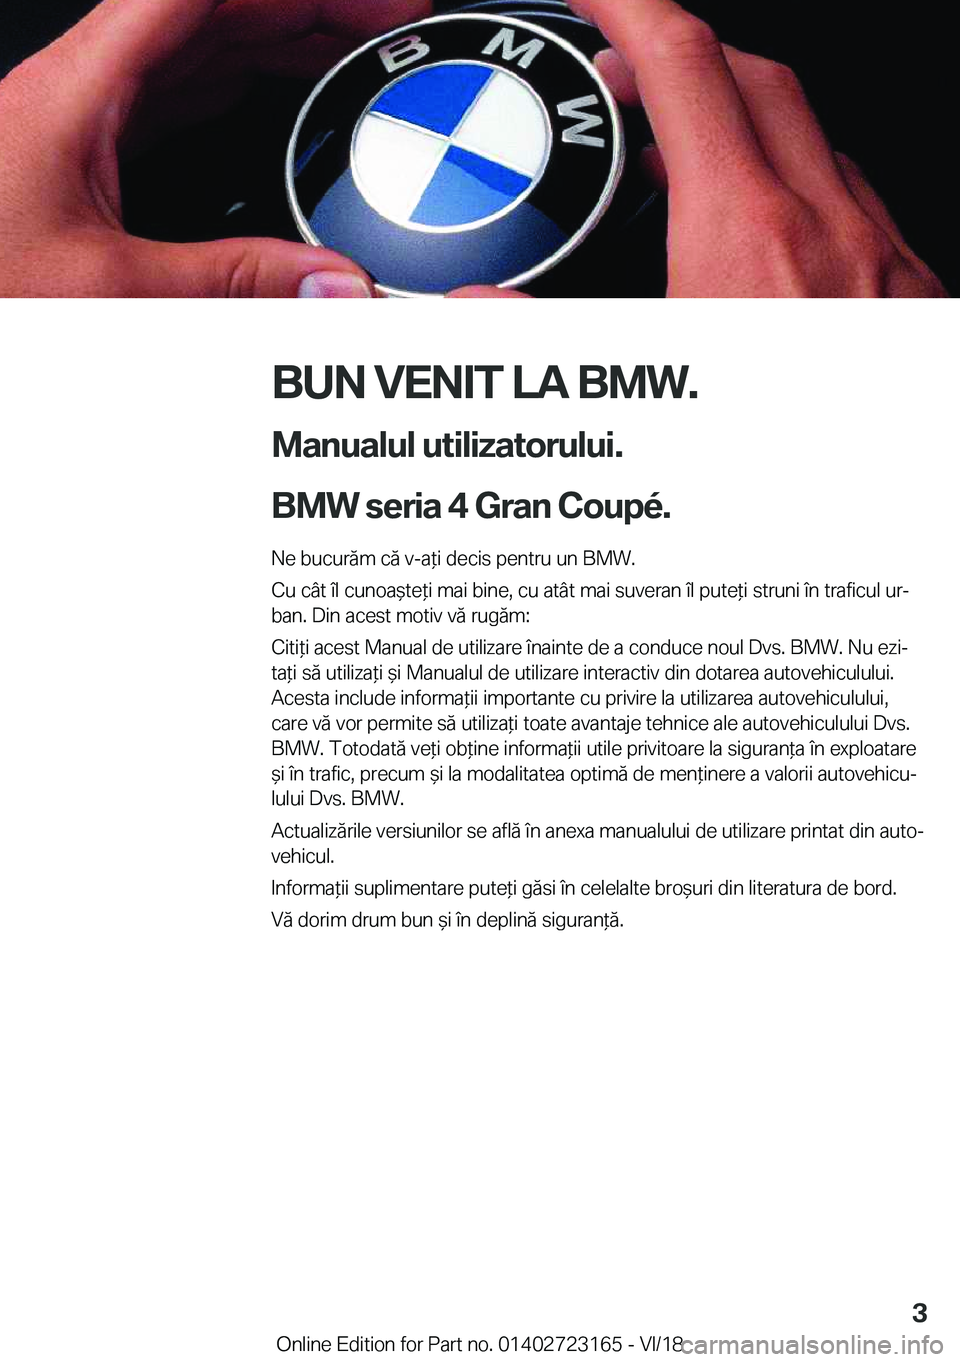 BMW 4 SERIES COUPE 2019  Ghiduri De Utilizare (in Romanian) �B�U�N��V�E�N�I�T��L�A��B�M�W�.�M�a�n�u�a�l�u�l��u�t�i�l�i�z�a�t�o�r�u�l�u�i�.
�B�M�W��s�e�r�i�a��4��G�r�a�n��C�o�u�p�